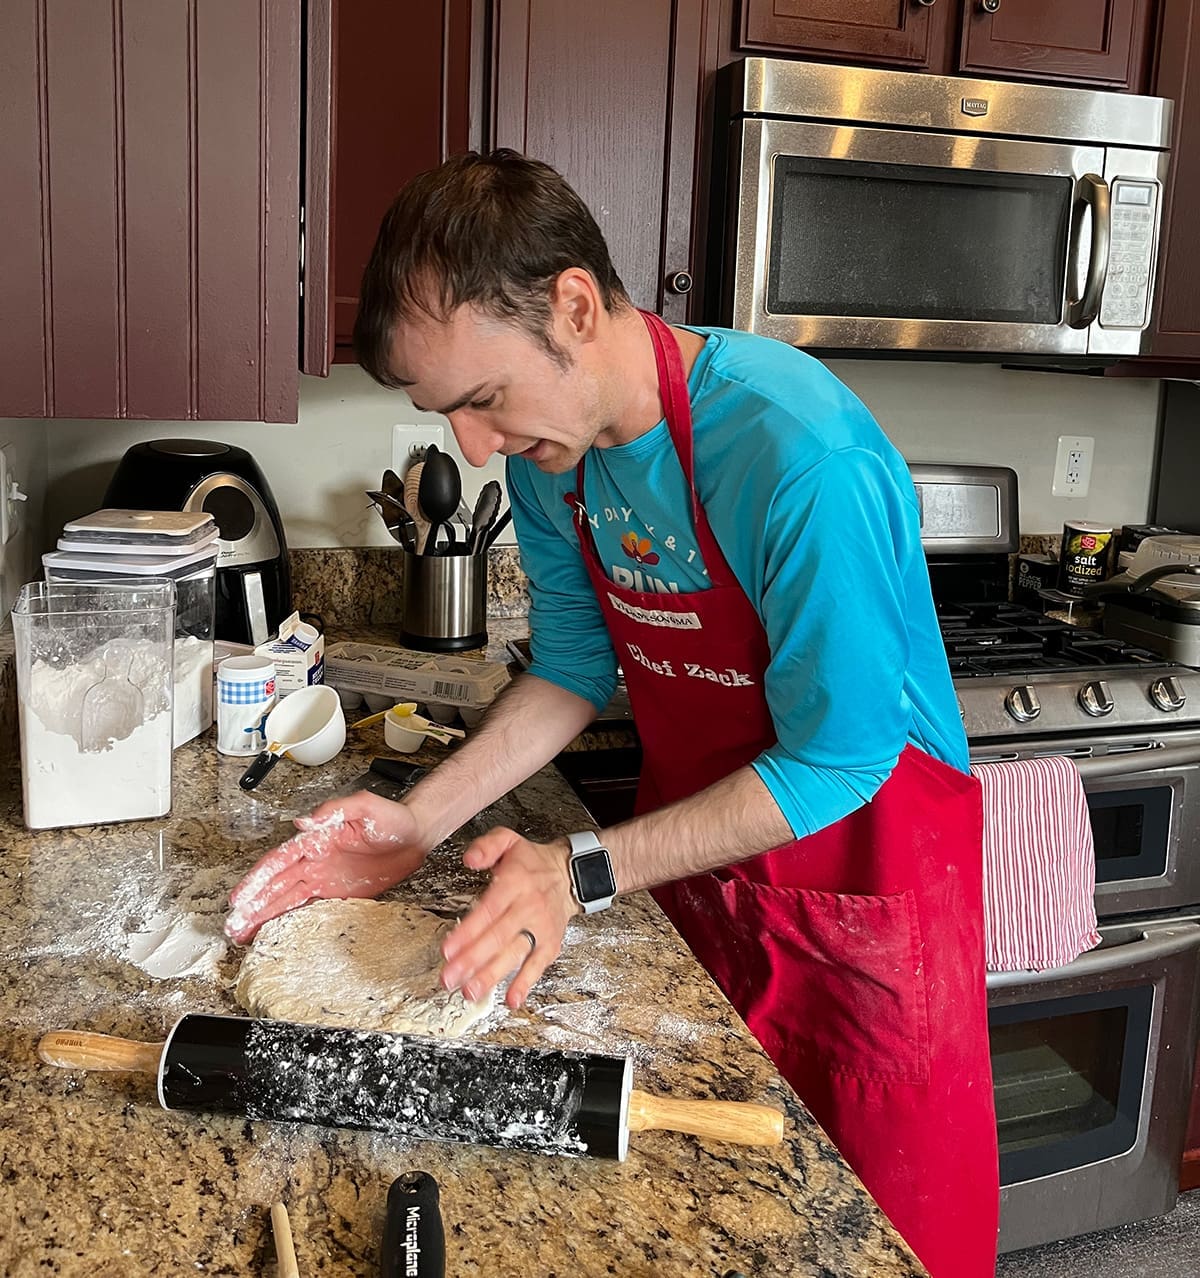 Xak forming the scone dough.